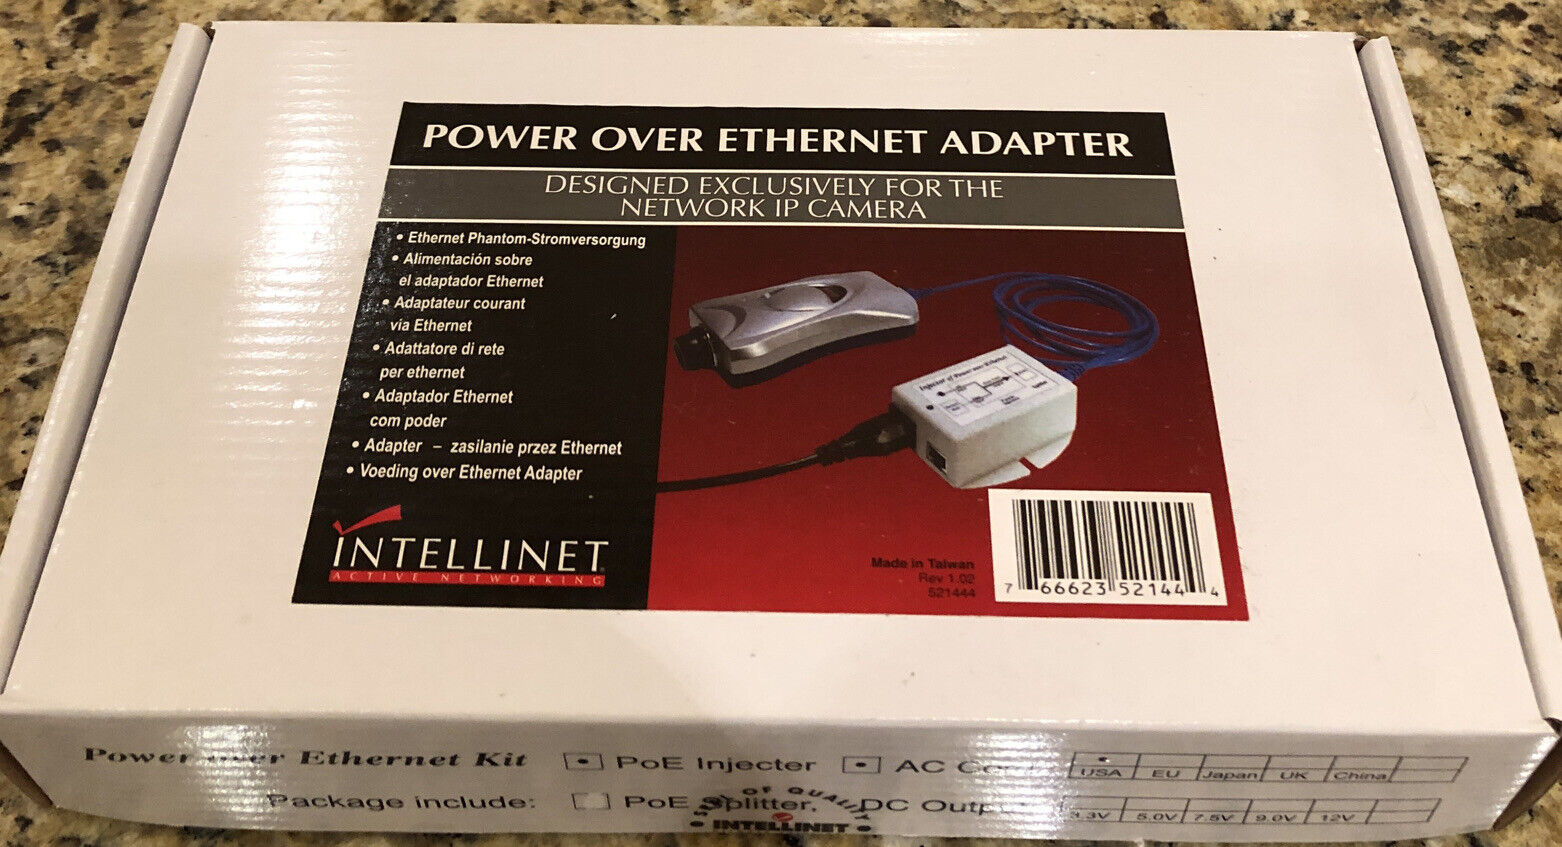 INTELLINET 521444 POWER OVER ETHERNET Adapter Kit. New & Sealed